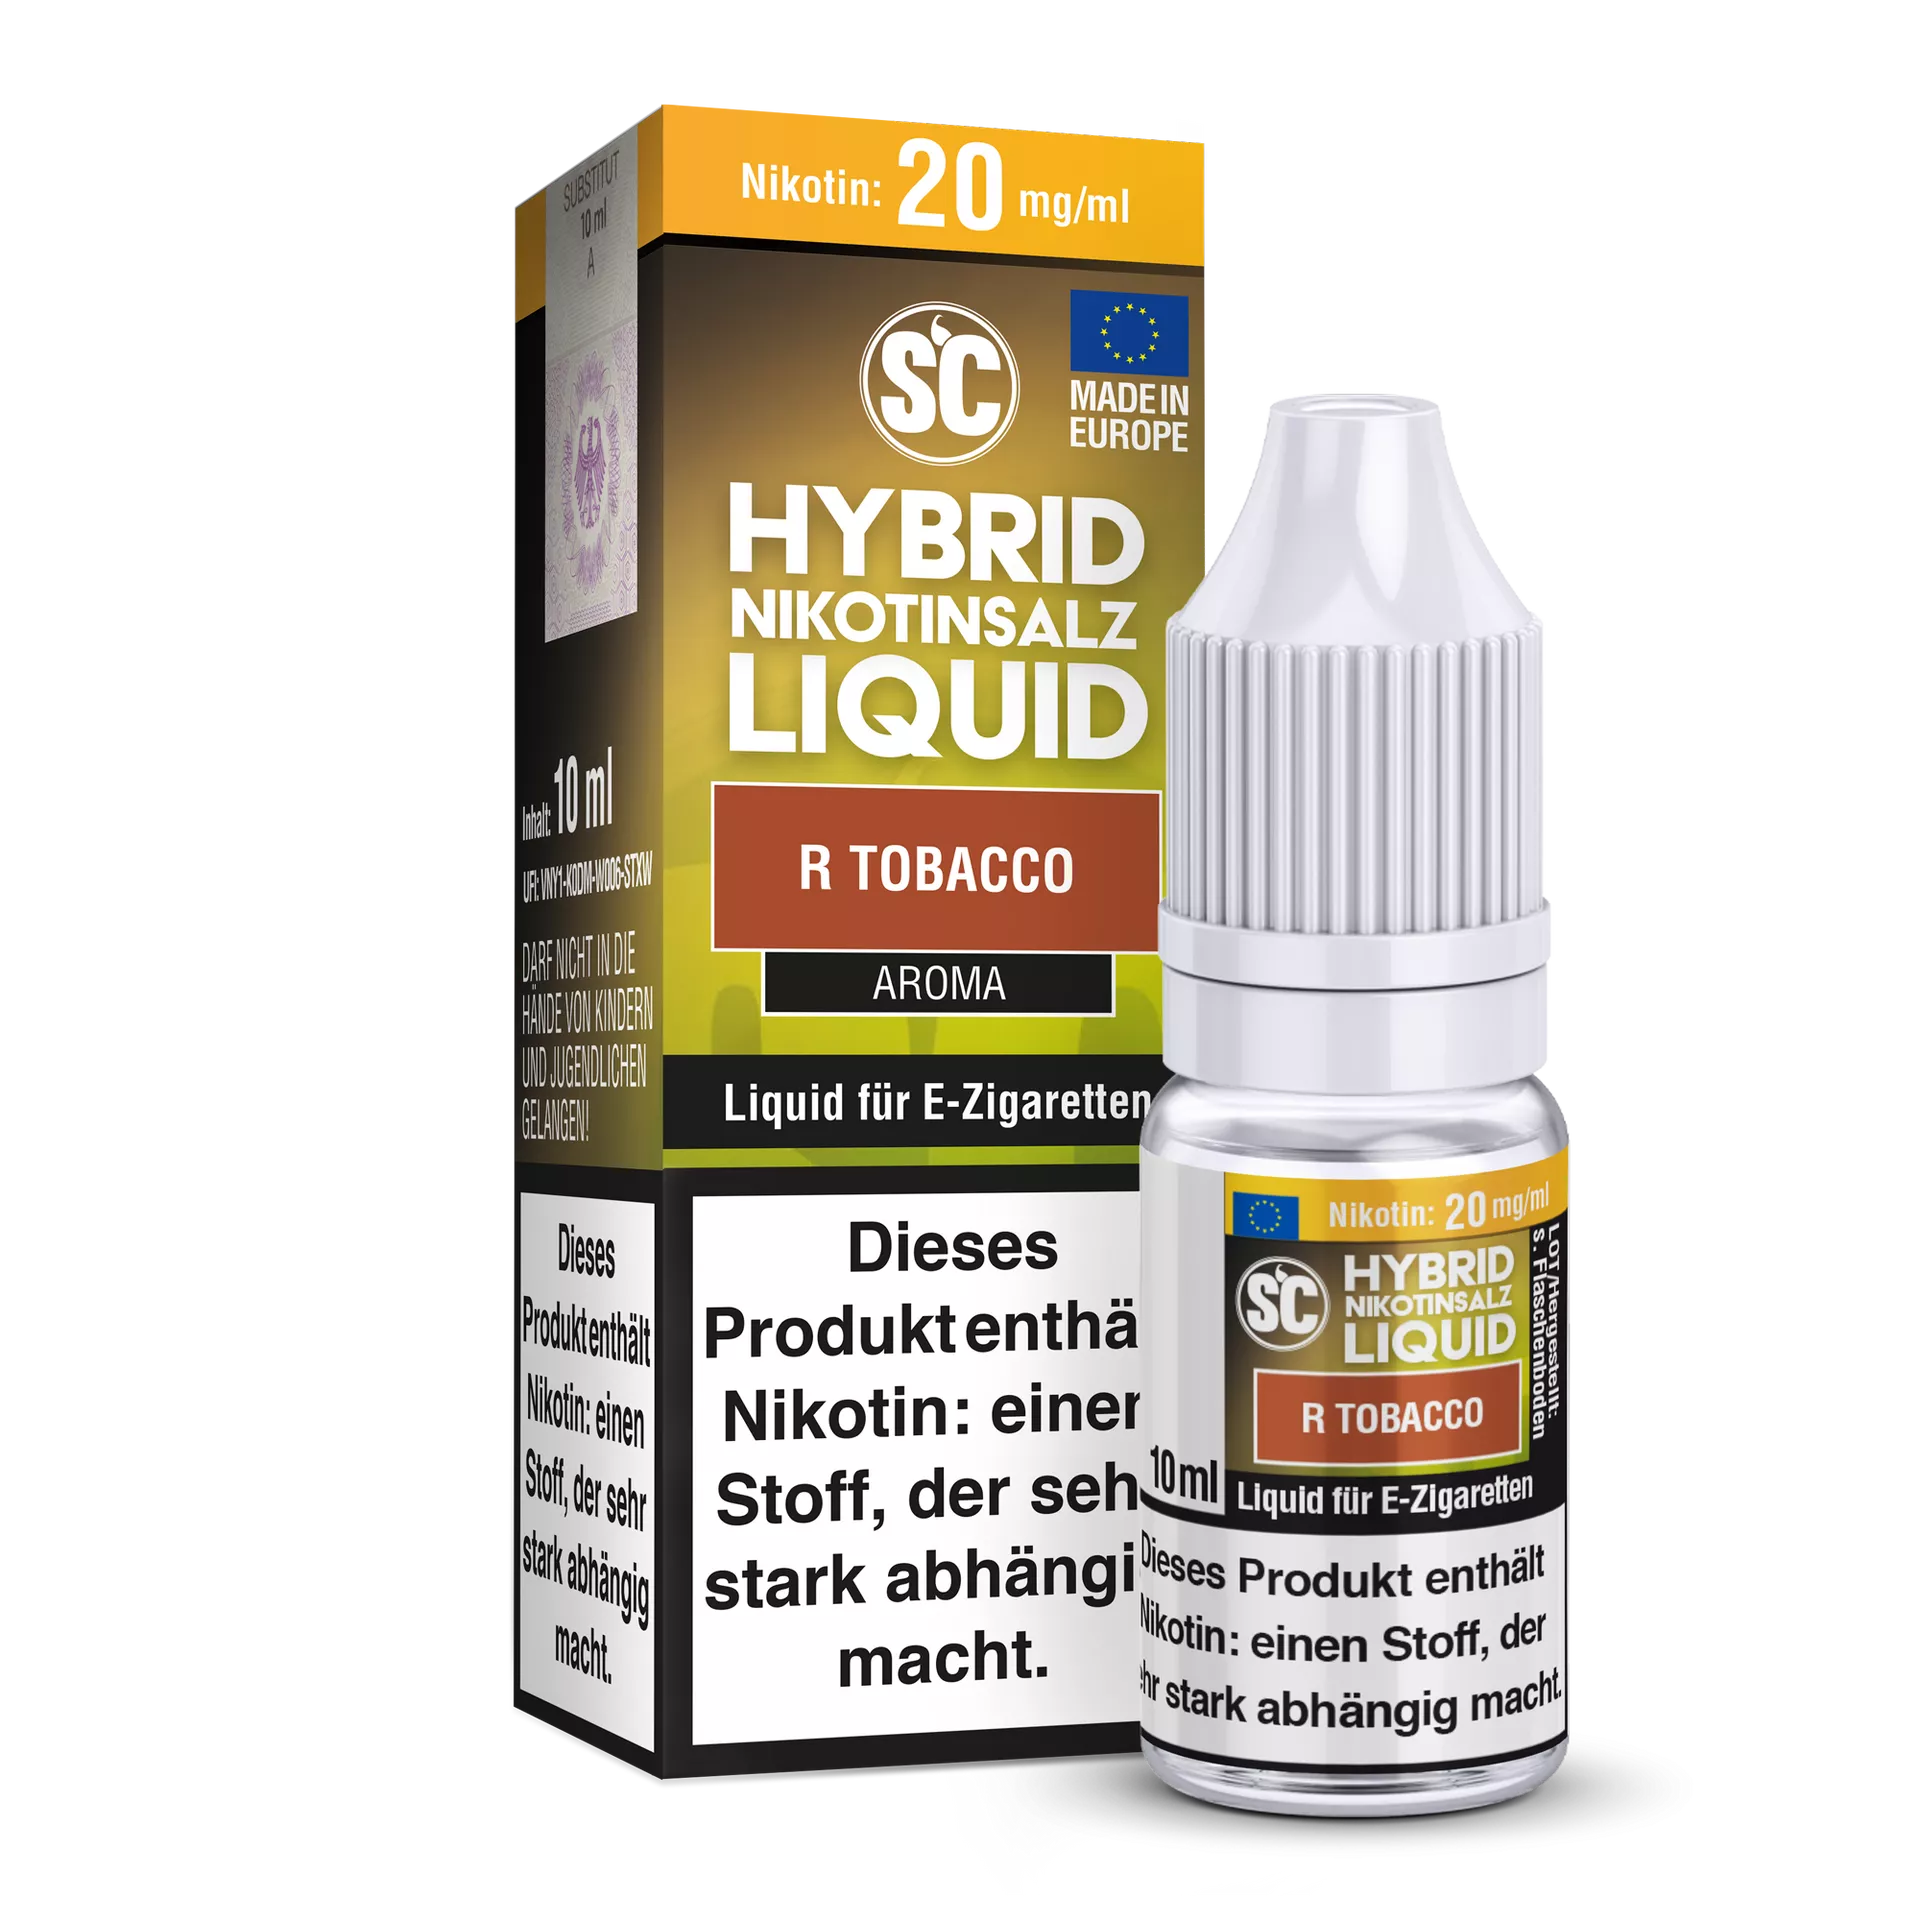 SC Hybrid Nikotinsalz Liquid R Tobacco - 20mg/ml